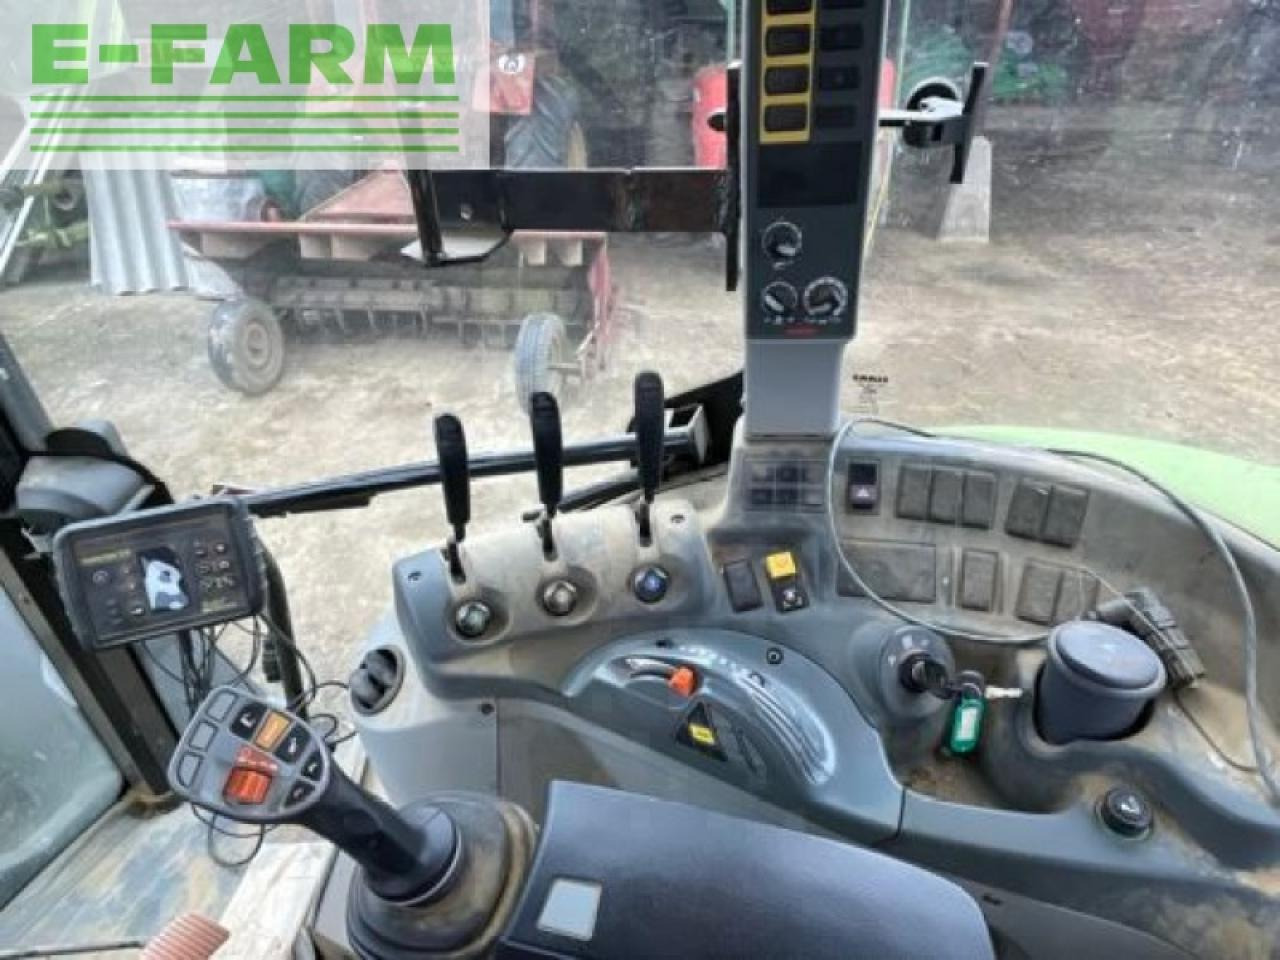 Farm tractor CLAAS arion 420 cis